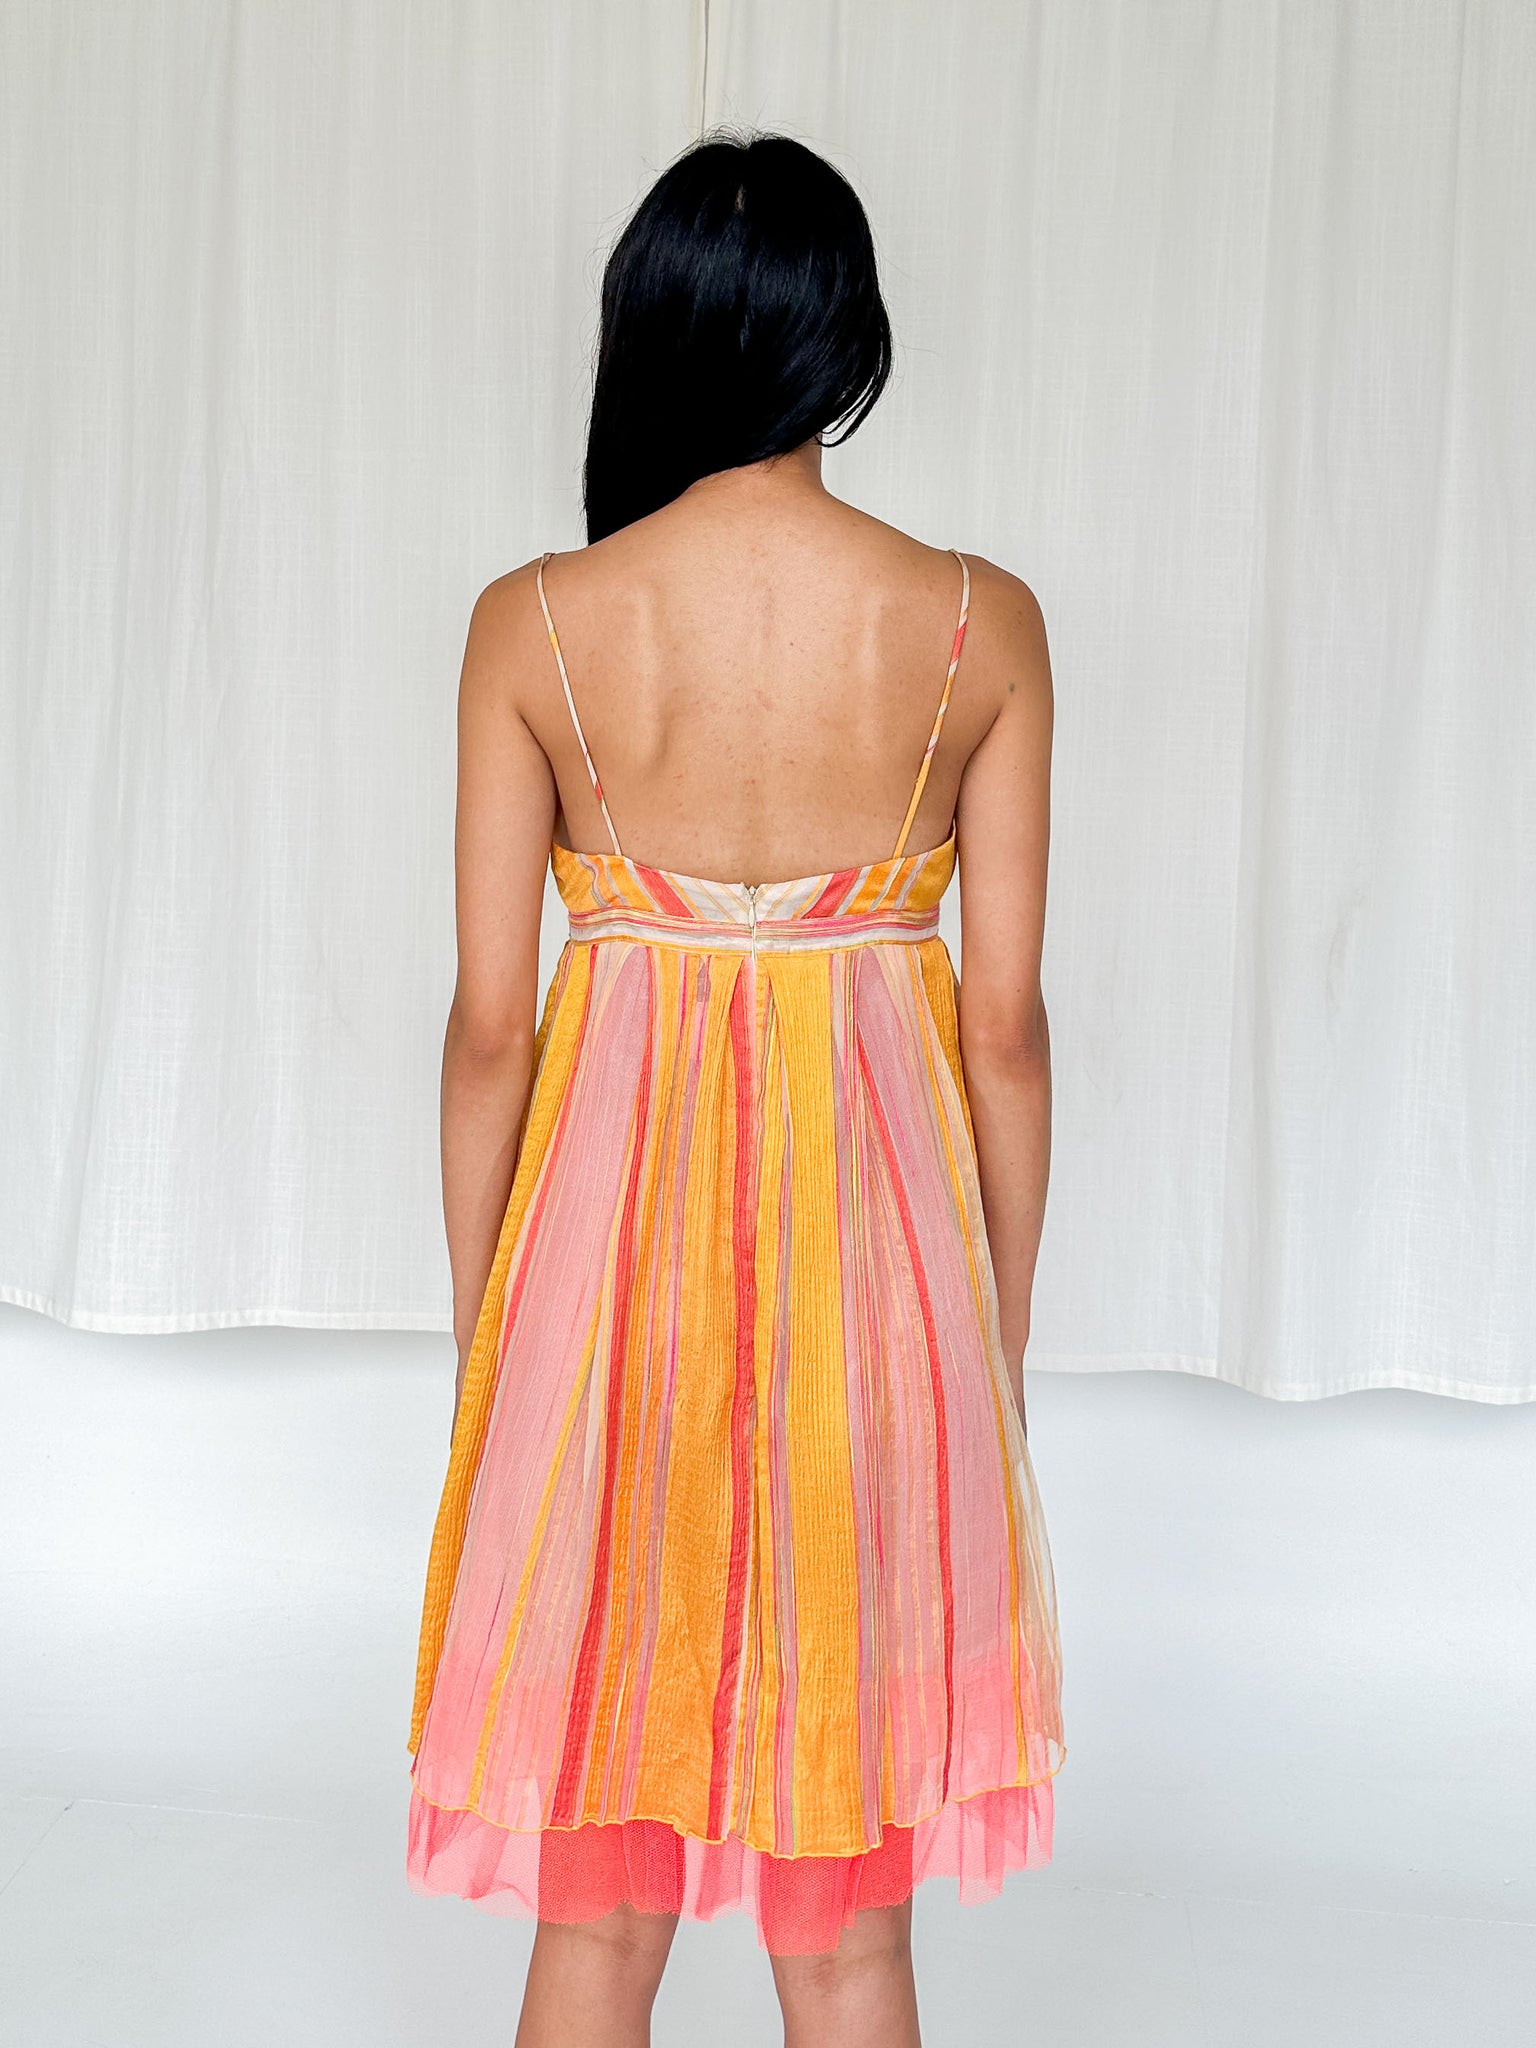 Anna Sui Silk Woven Striped Tulle Dress (S)